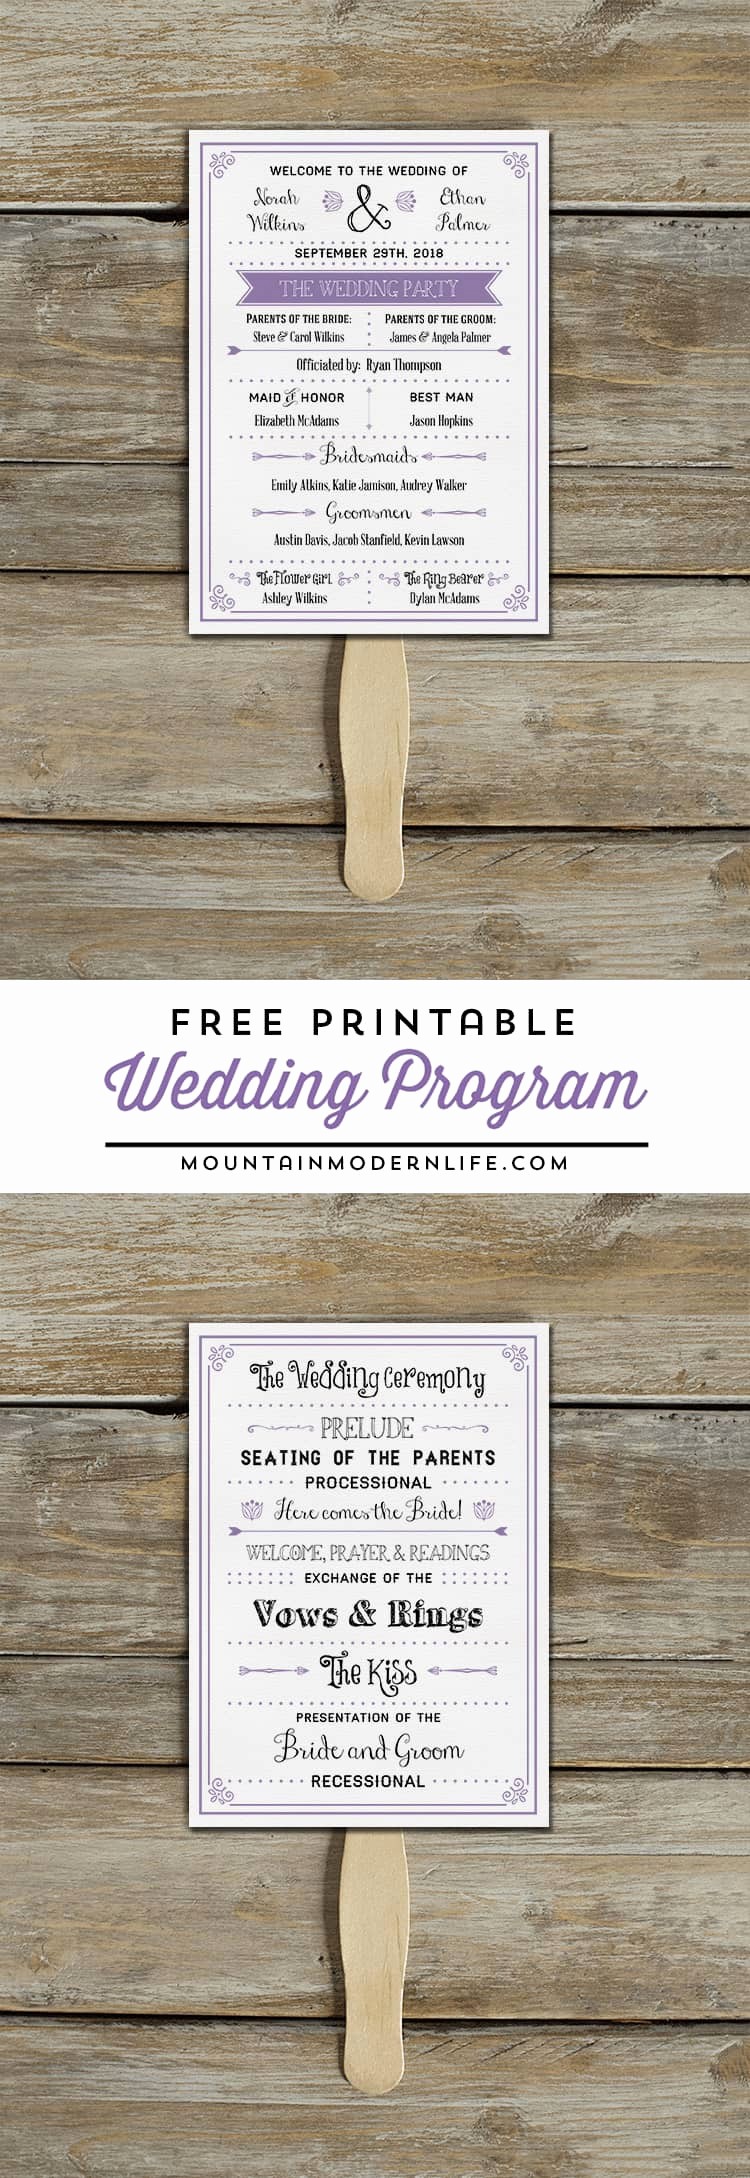 Free Wedding Ceremony Program Template Fresh Free Printable Wedding Program